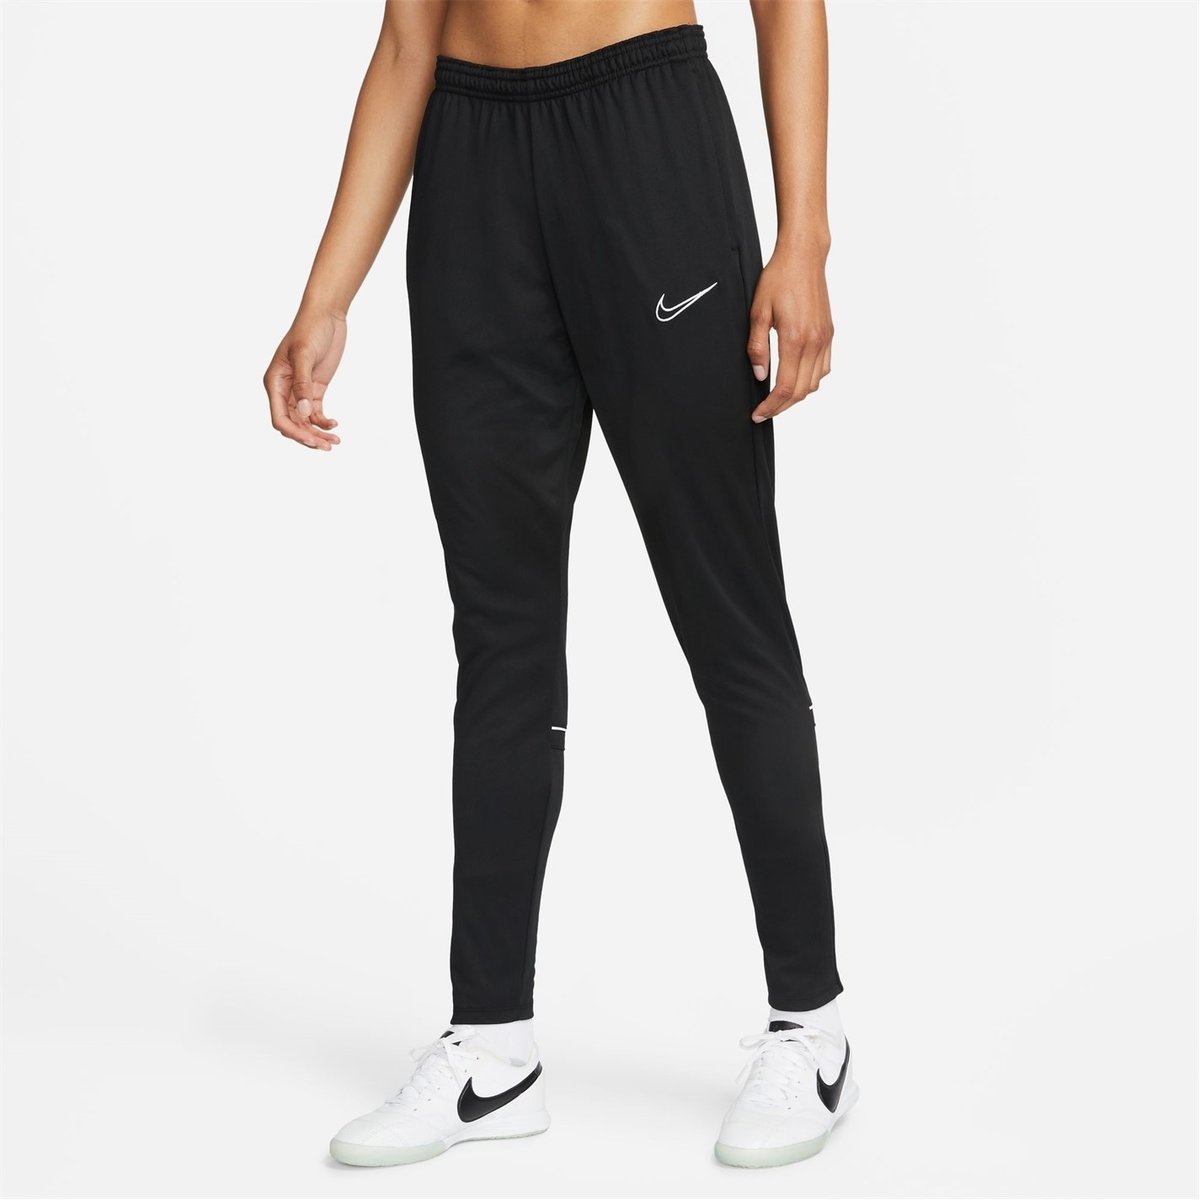 Nike F.C. Soccer Pants Joggers Tapered Cuffed Black Medium